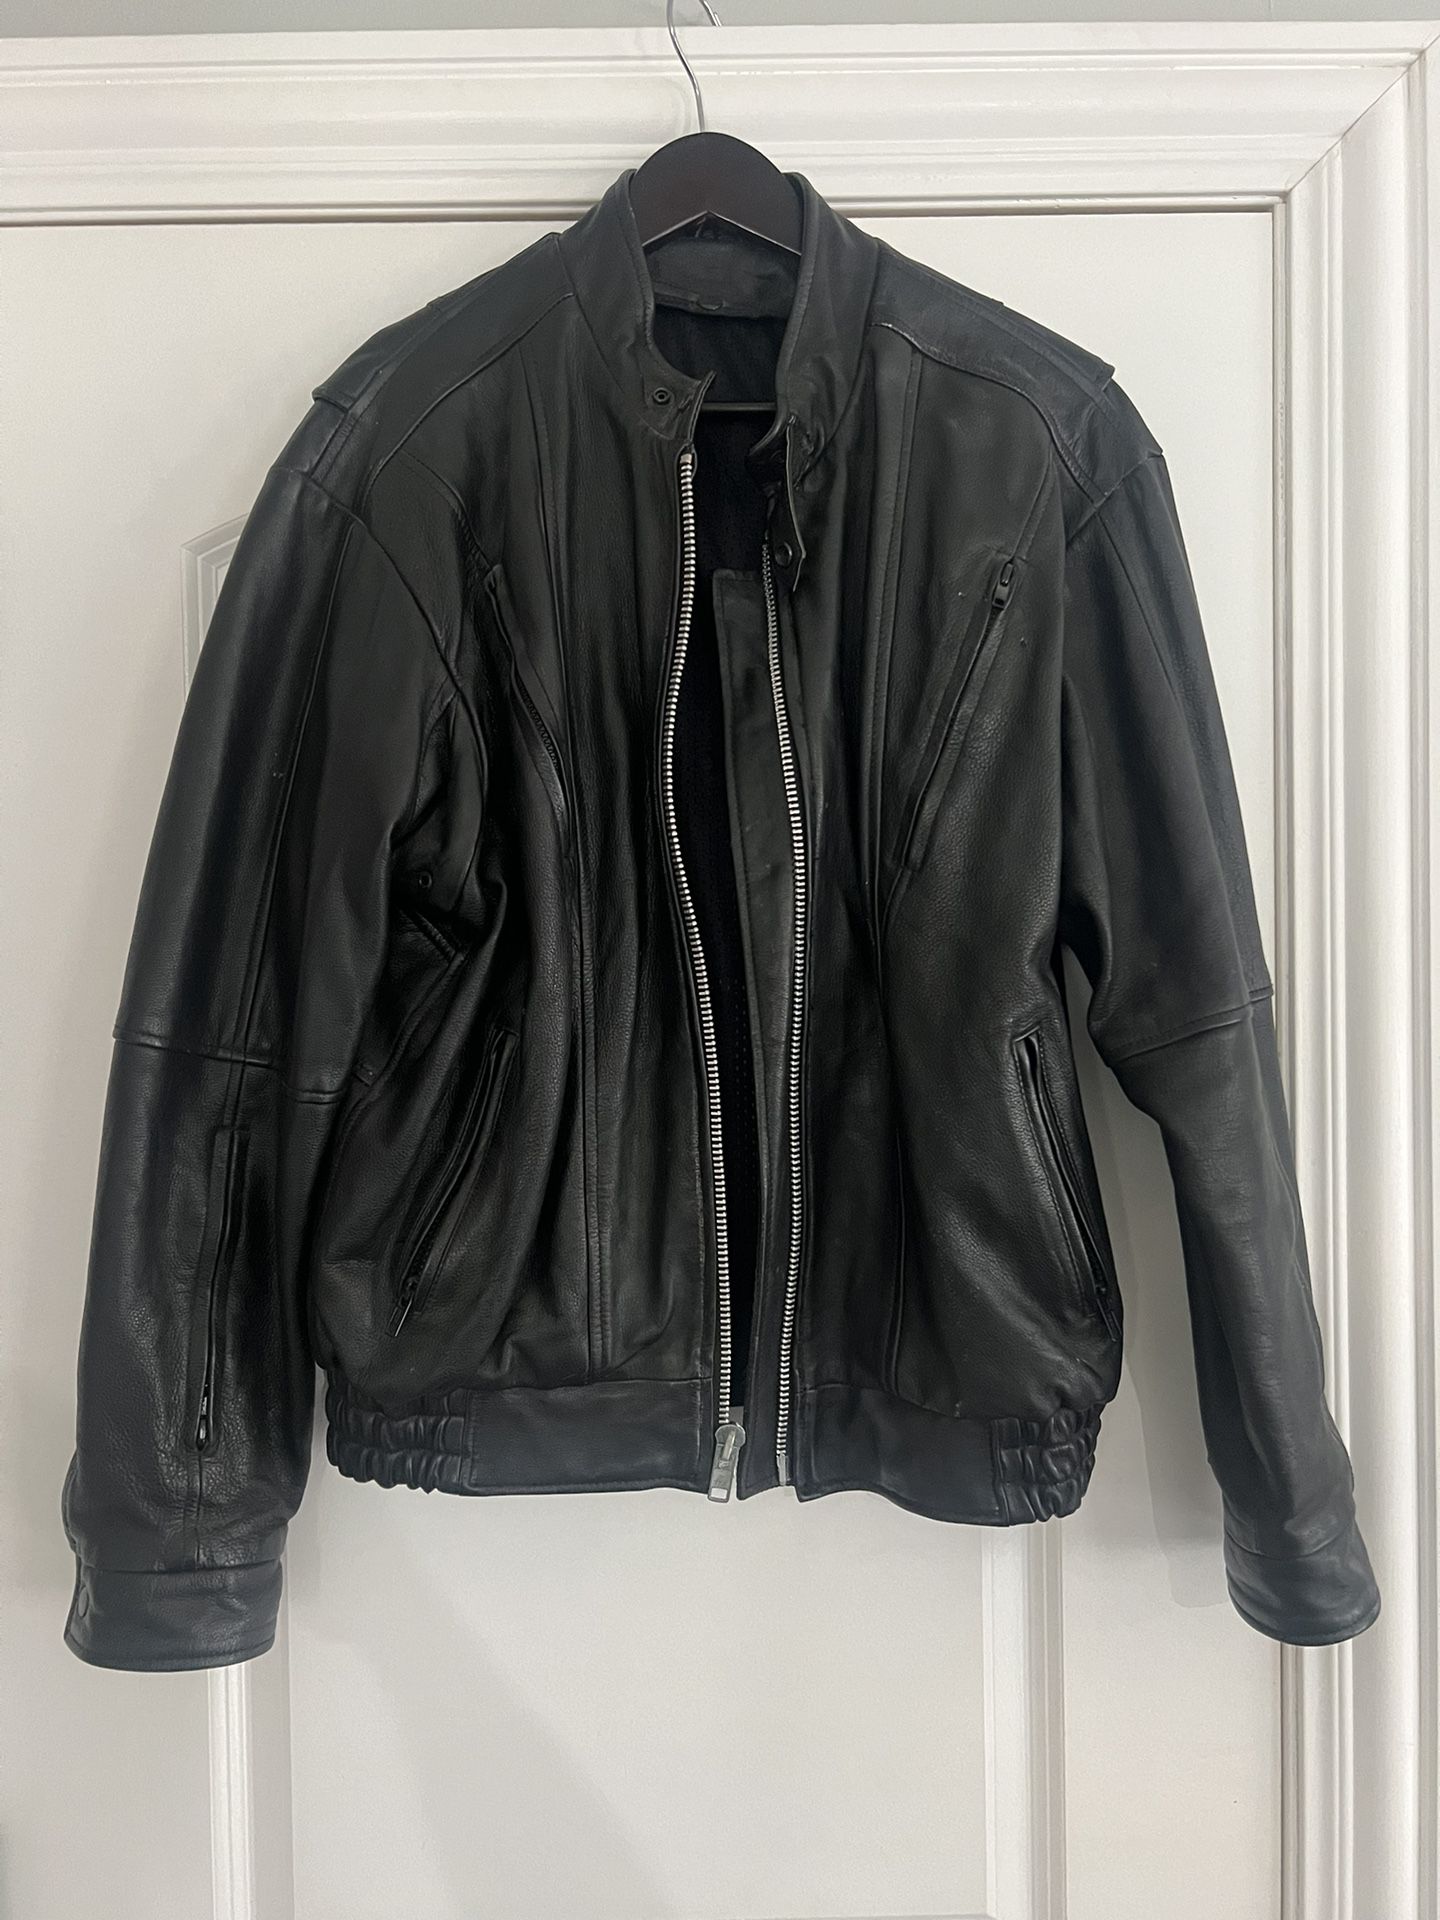 Leather Motorcycle Riding Jacket Size 44 Fits Large